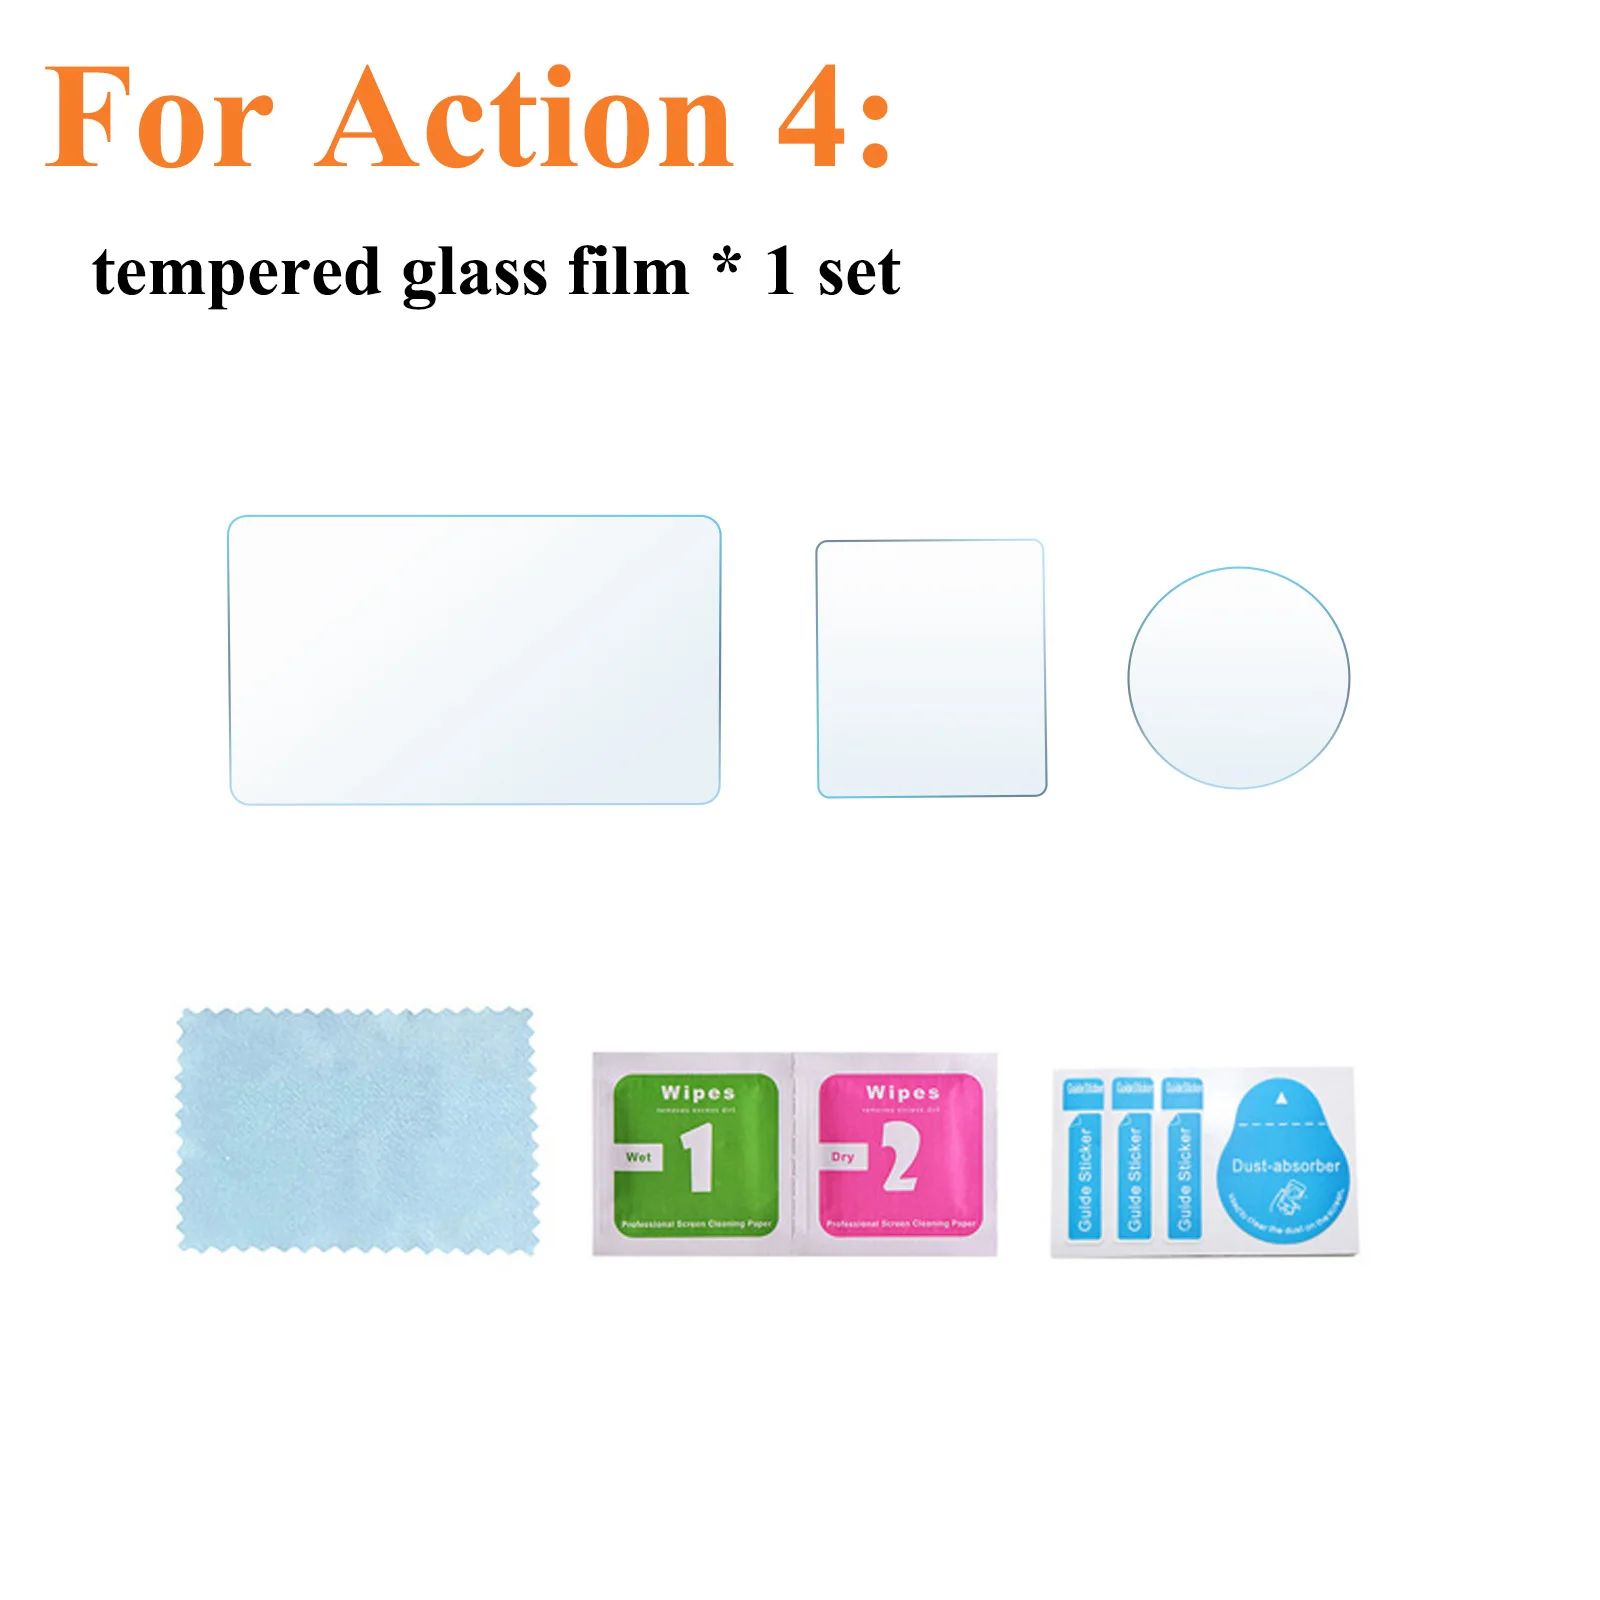 Färg: Action 4 Film 1 Set